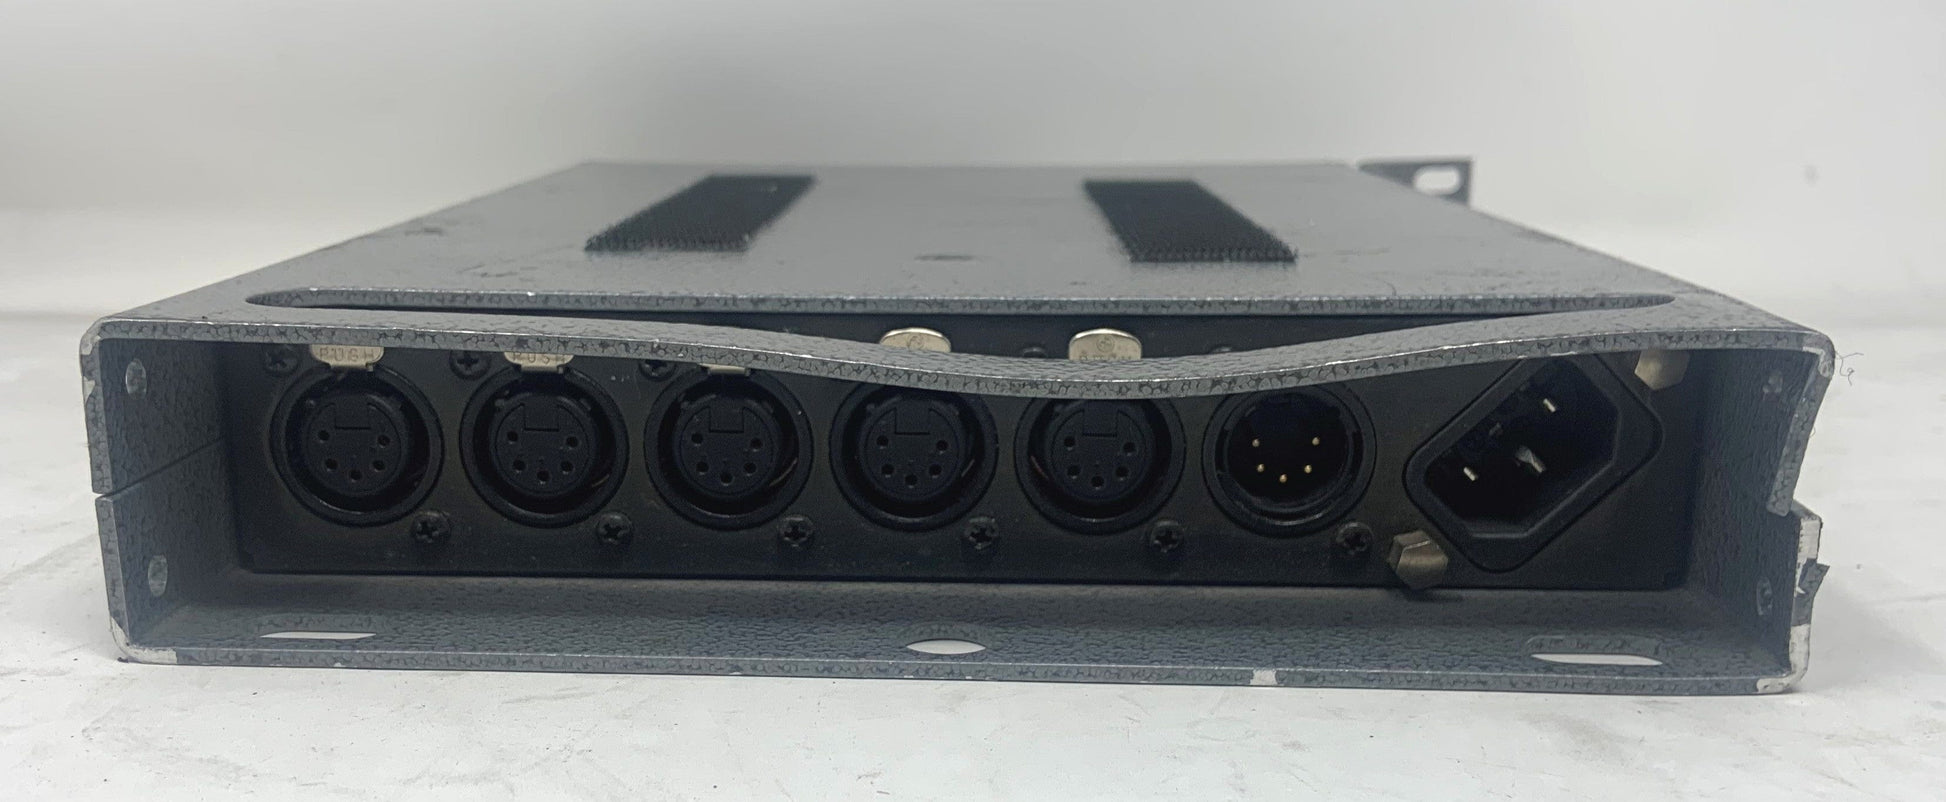 Doug Fleenor Design 125EE Enhanced Isolated DMX Splitter - PSSL ProSound and Stage Lighting